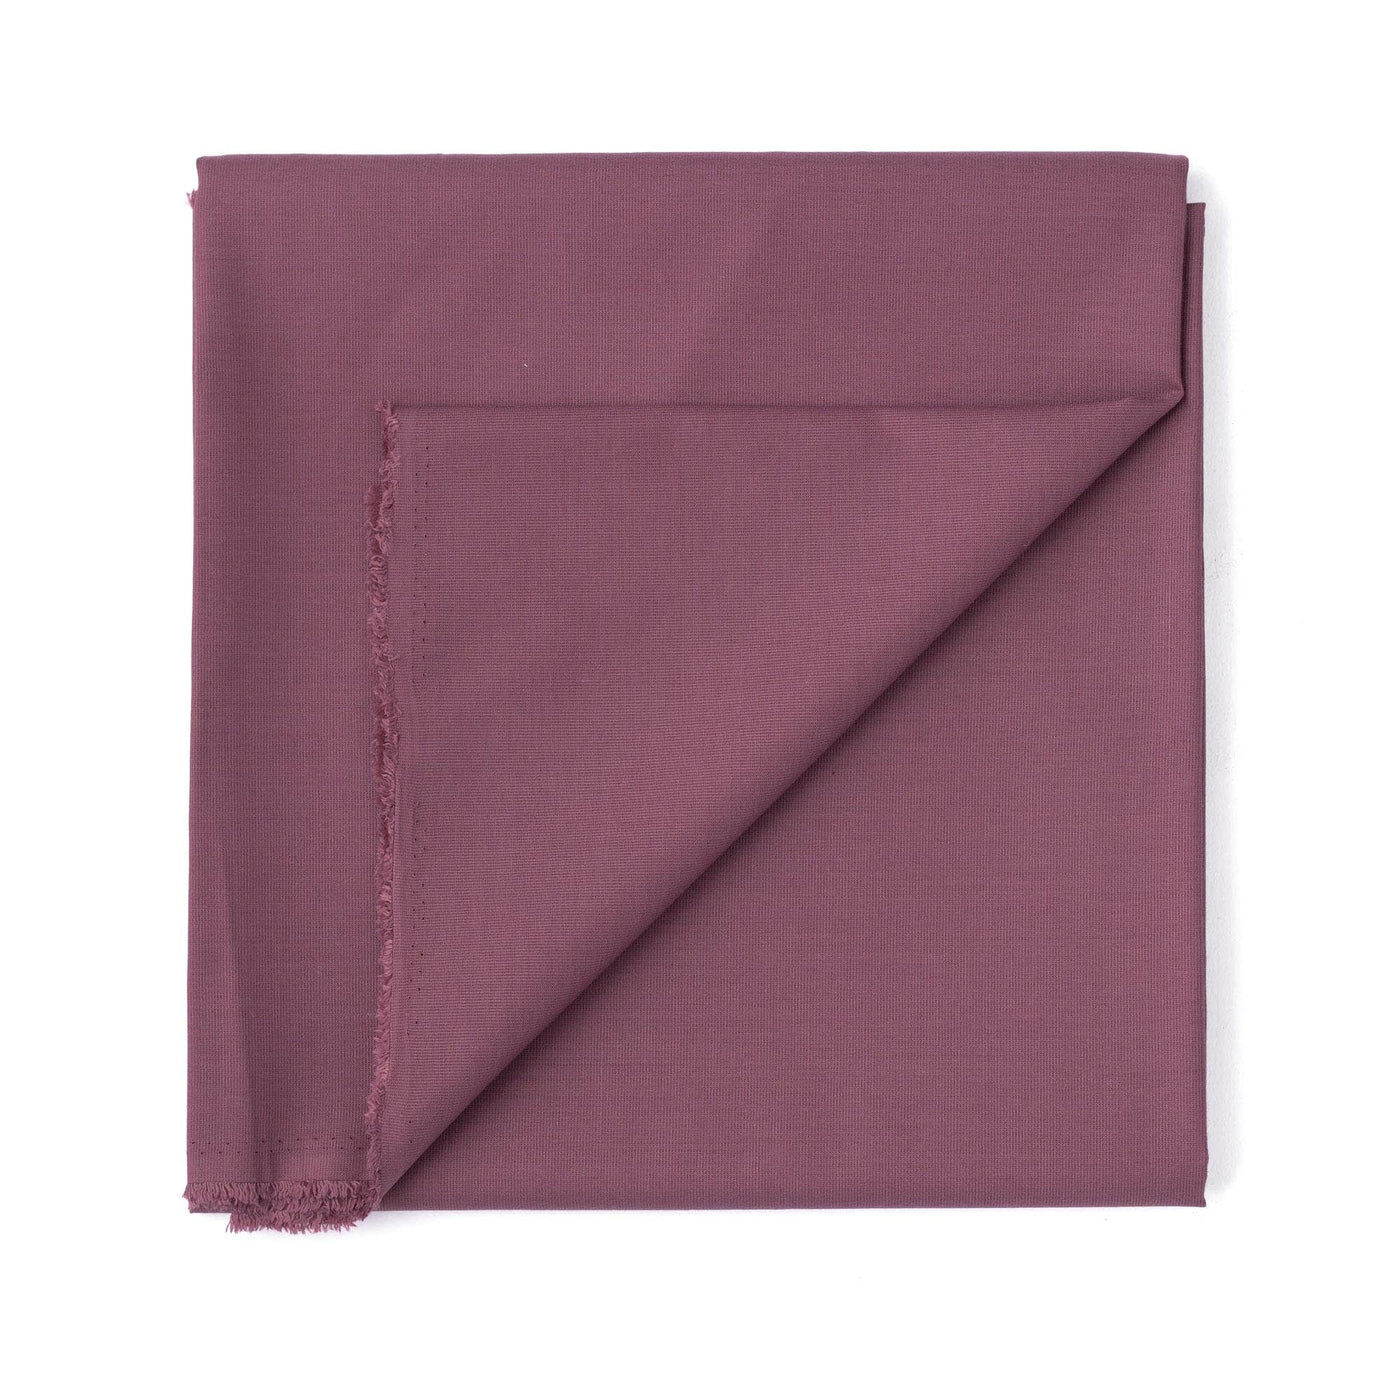 Fabric Pandit Cut Piece (CUT PIECE) Men's Dusty Mauve Textured Cotton Shirting Fabric (Width 58 inch)